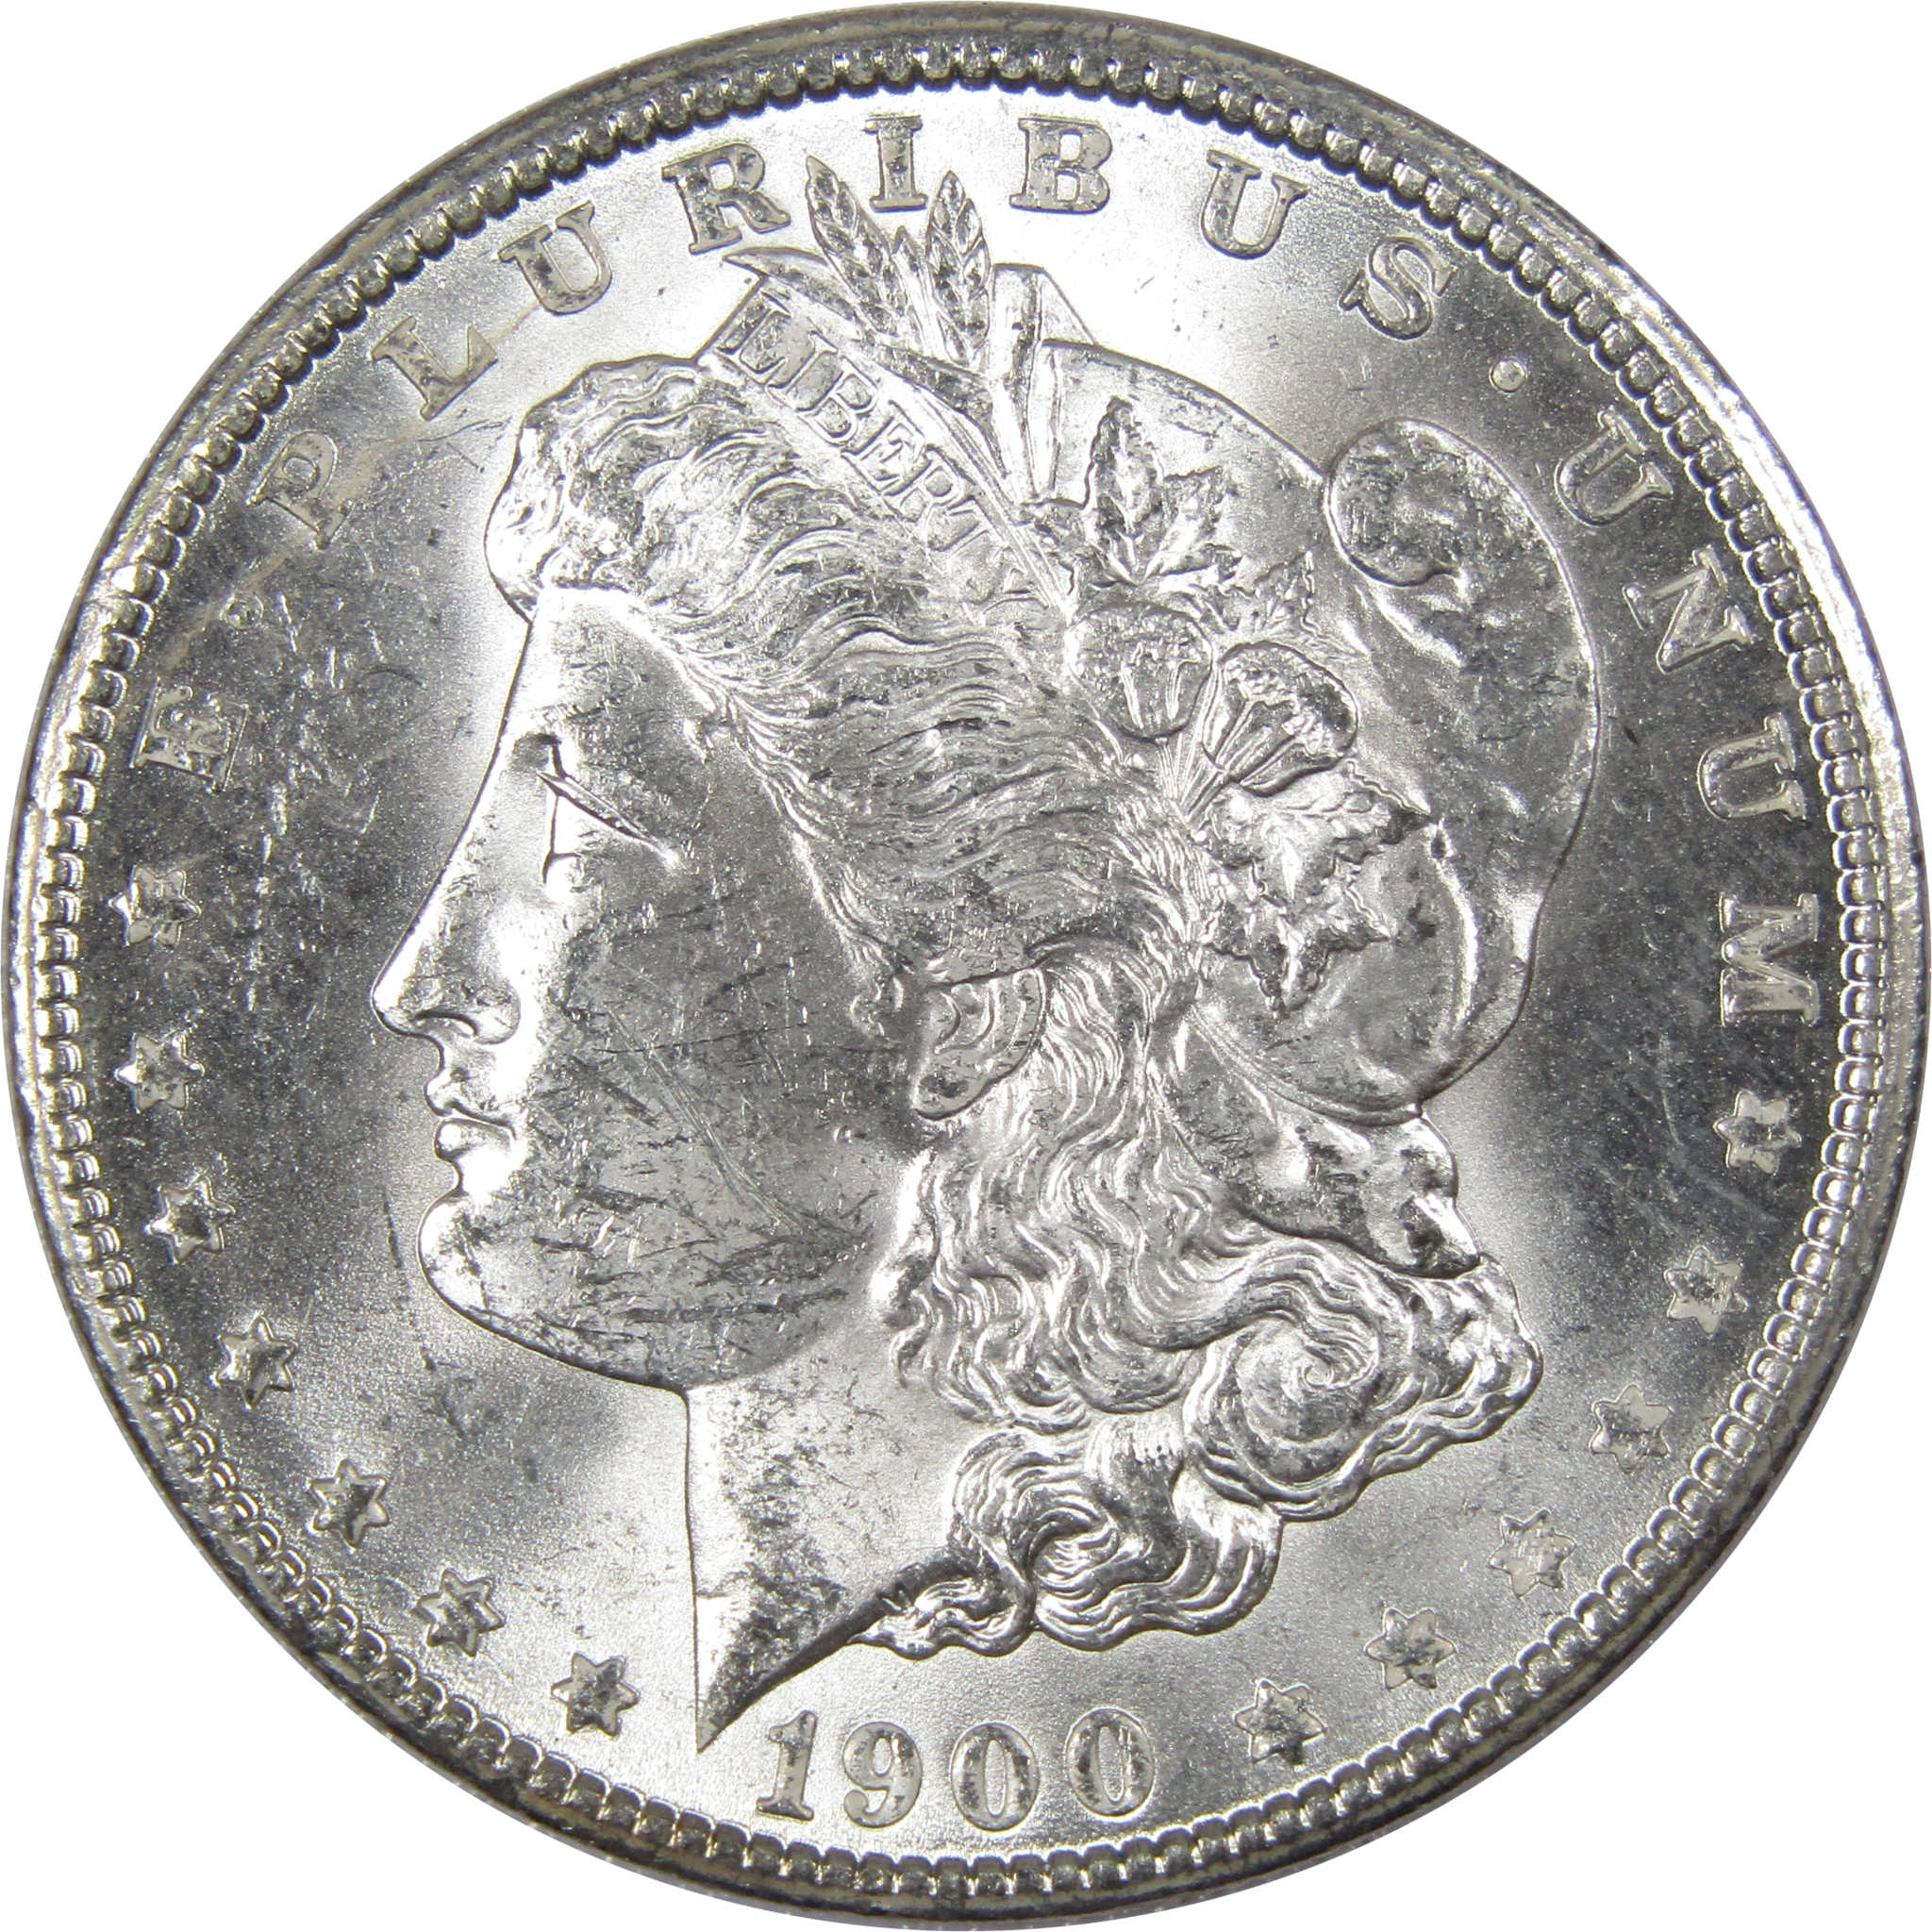 1900 O Morgan Dollar BU Uncirculated Mint State 90% Silver SKU:IPC9760 - Morgan coin - Morgan silver dollar - Morgan silver dollar for sale - Profile Coins &amp; Collectibles